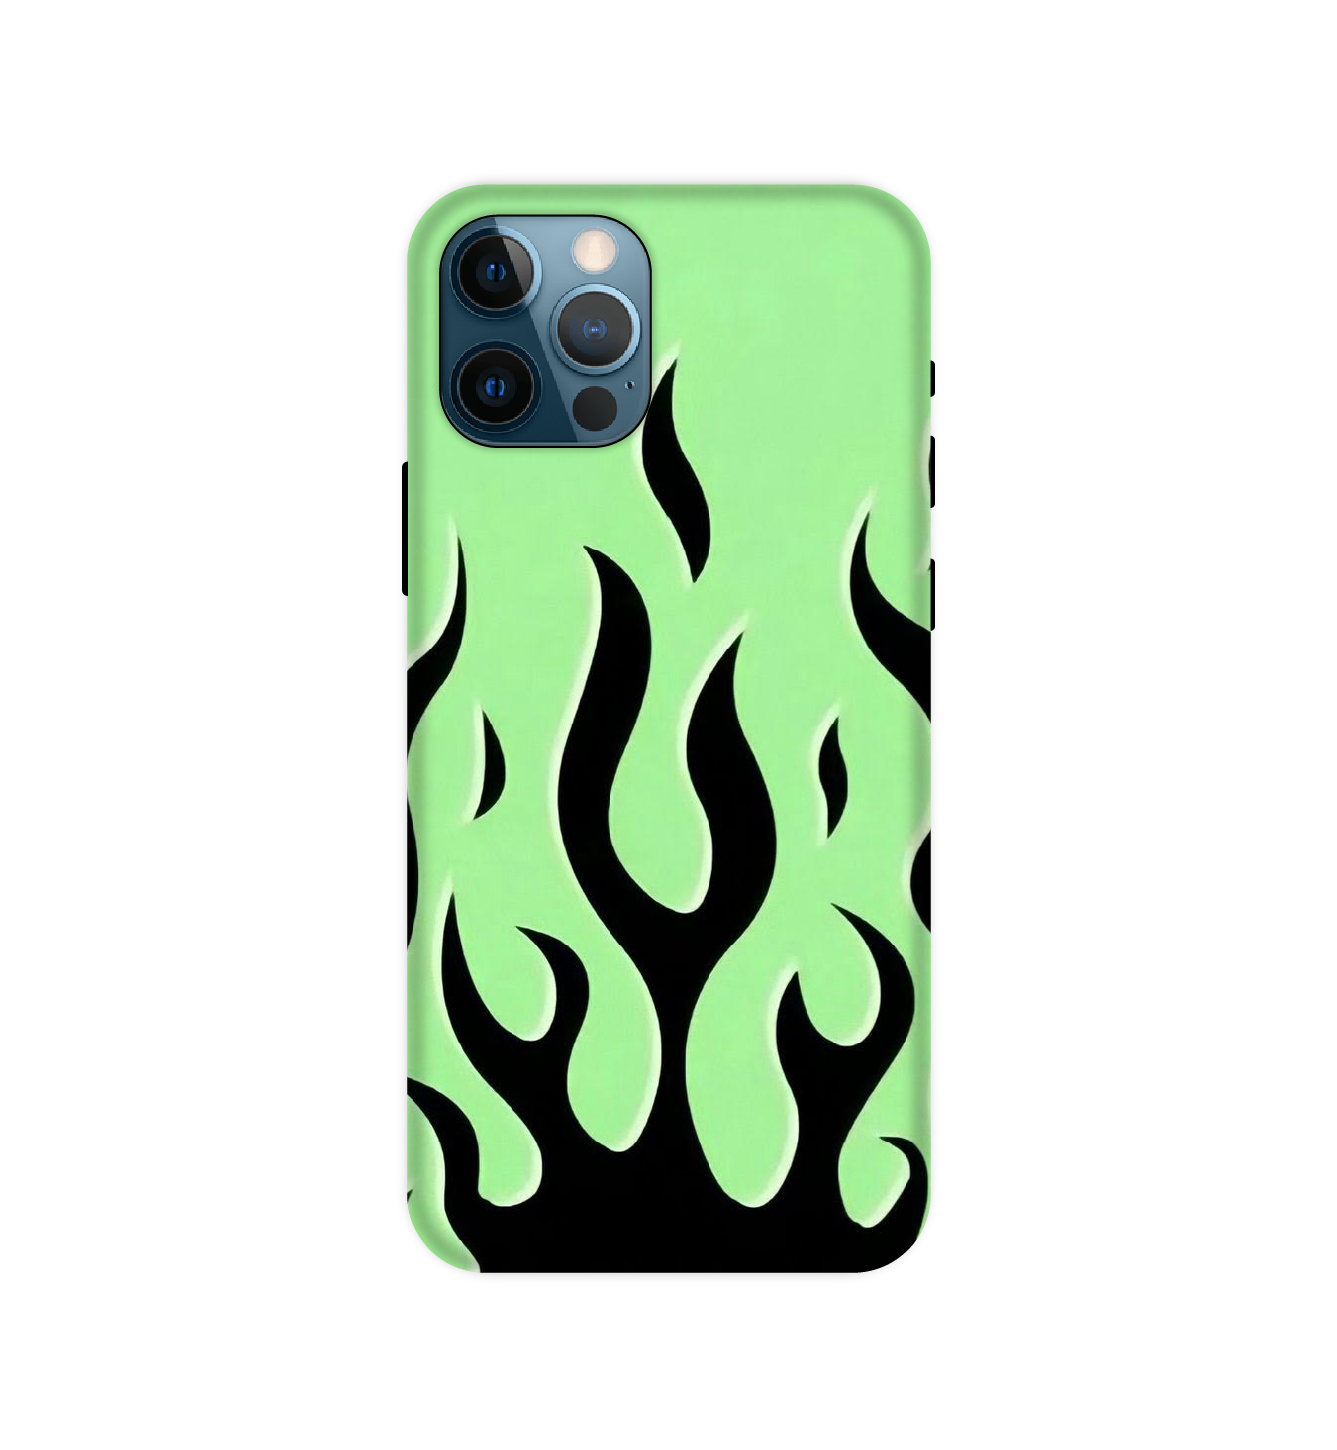 Green & Black Flames - Hard Cases For Apple iPhone Models